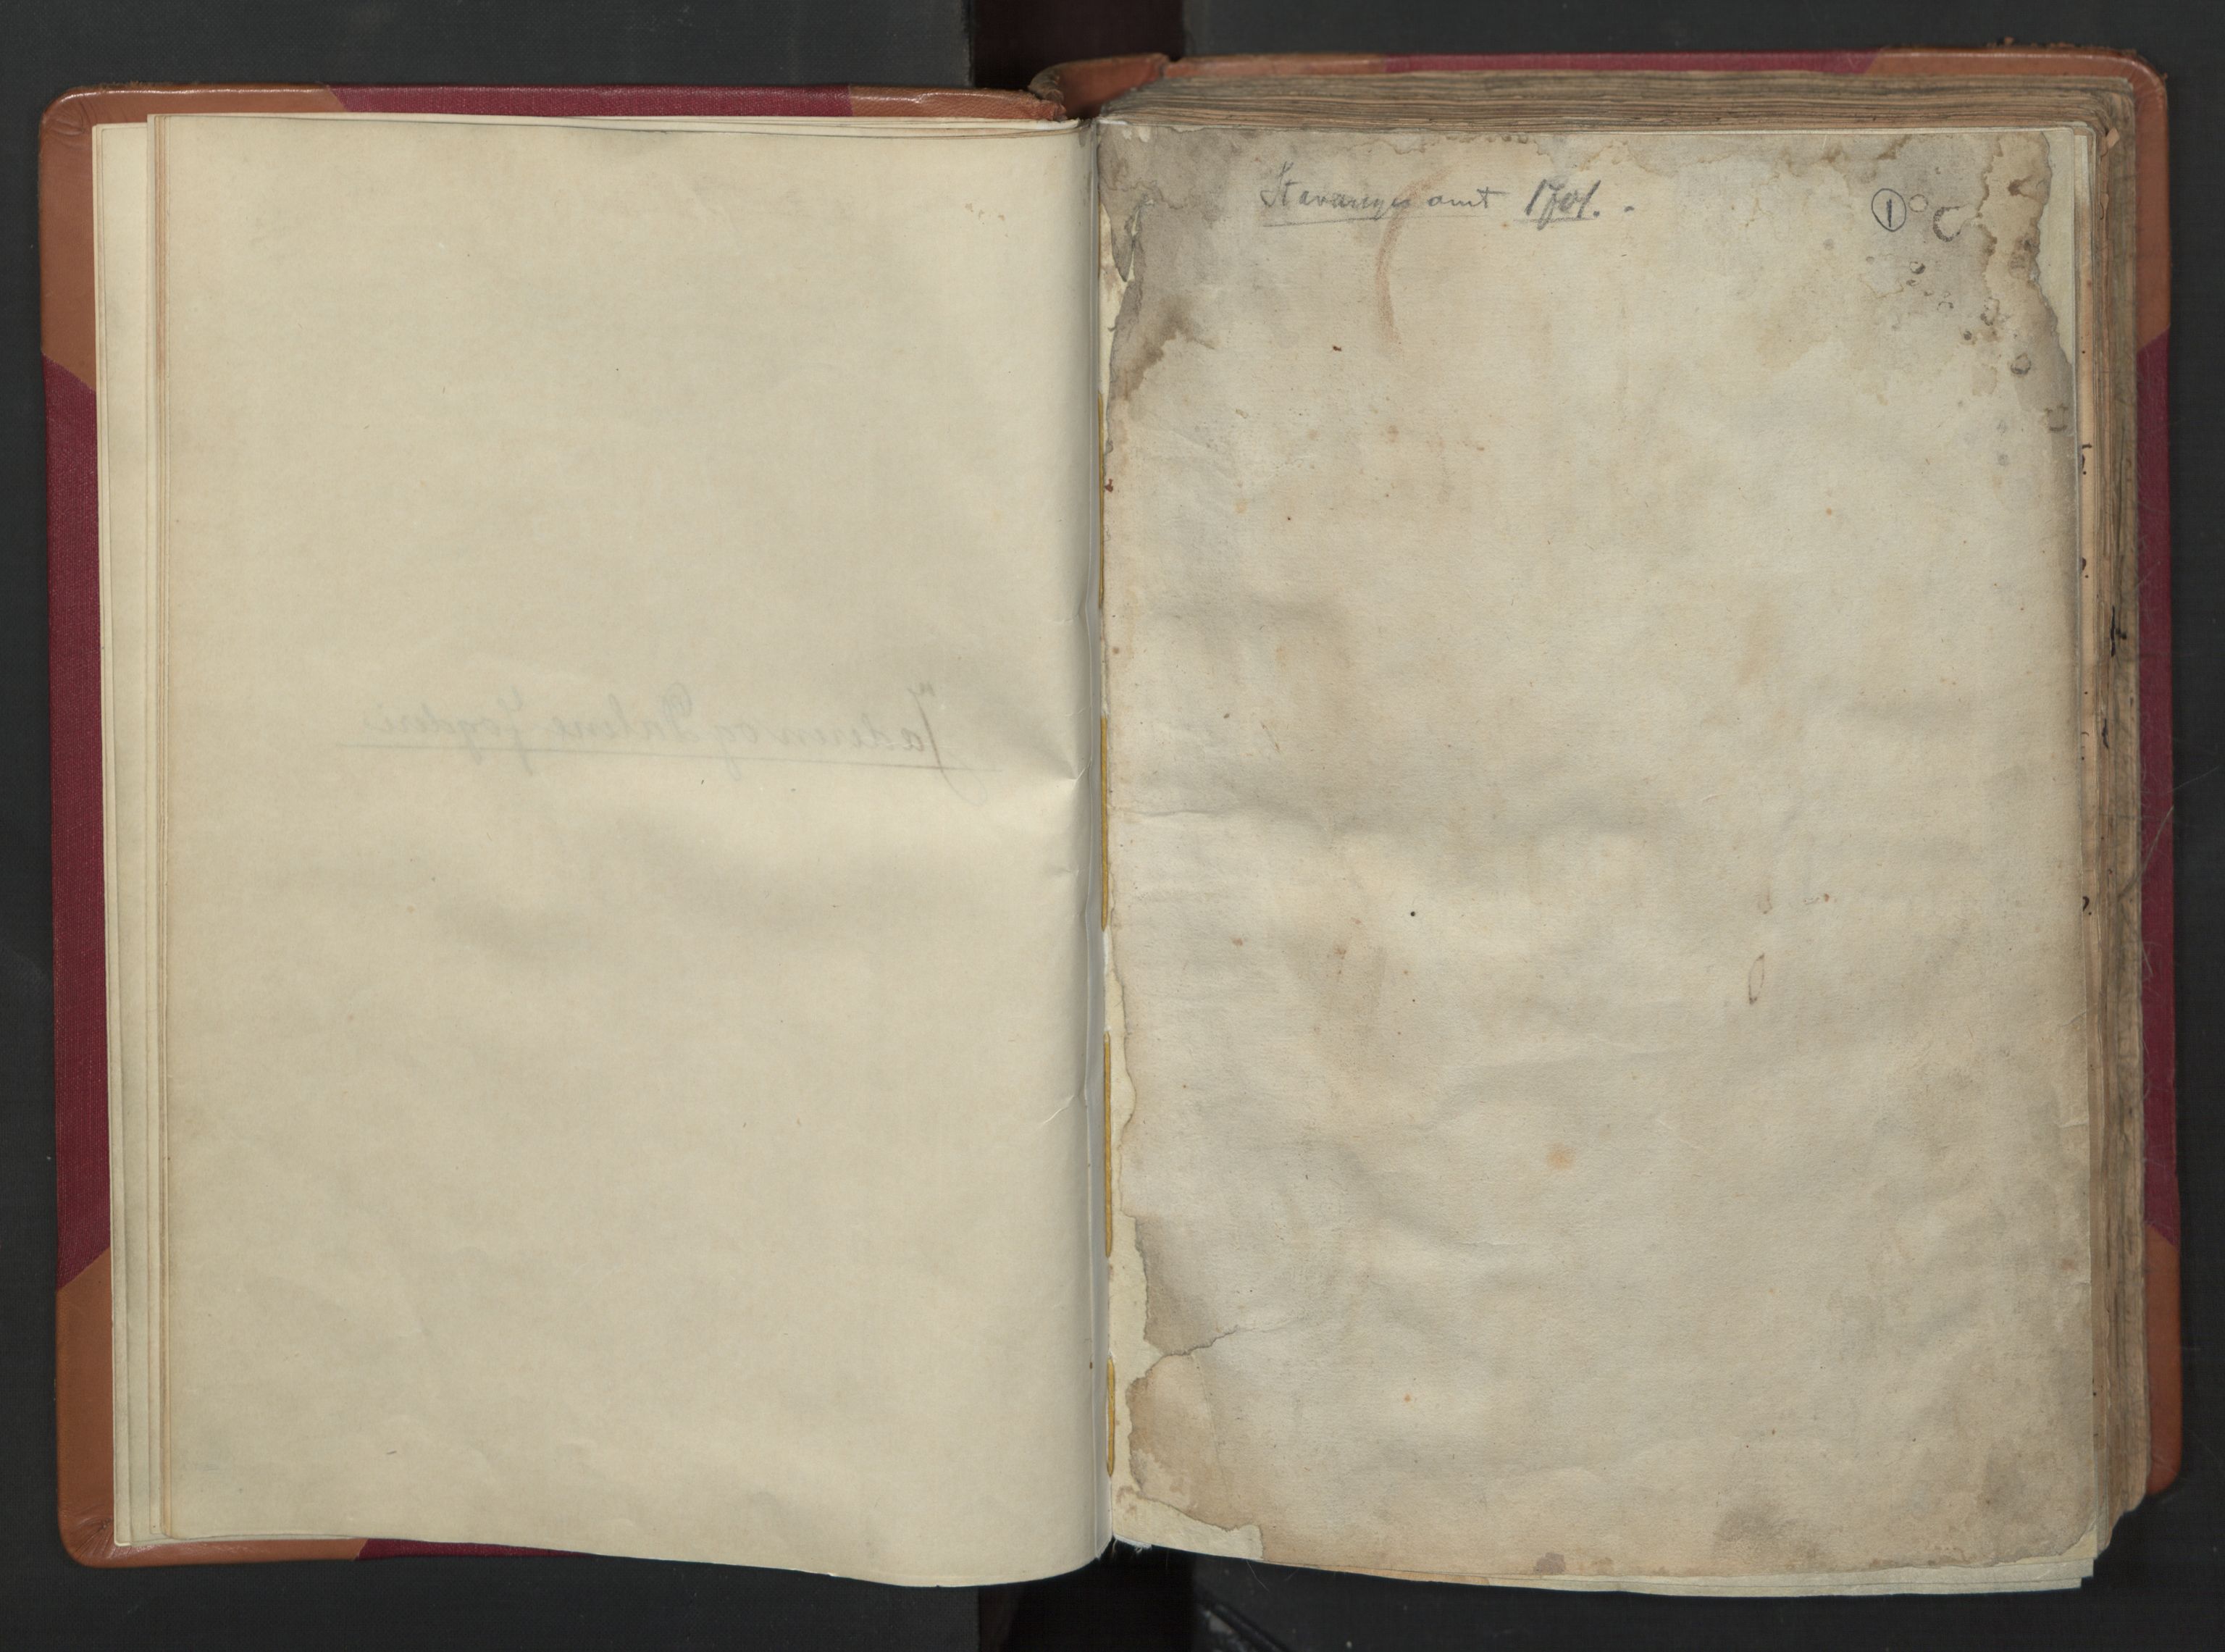 RA, Manntallet 1701, nr. 4: Jæren og Dalane fogderi, 1701, s. 1